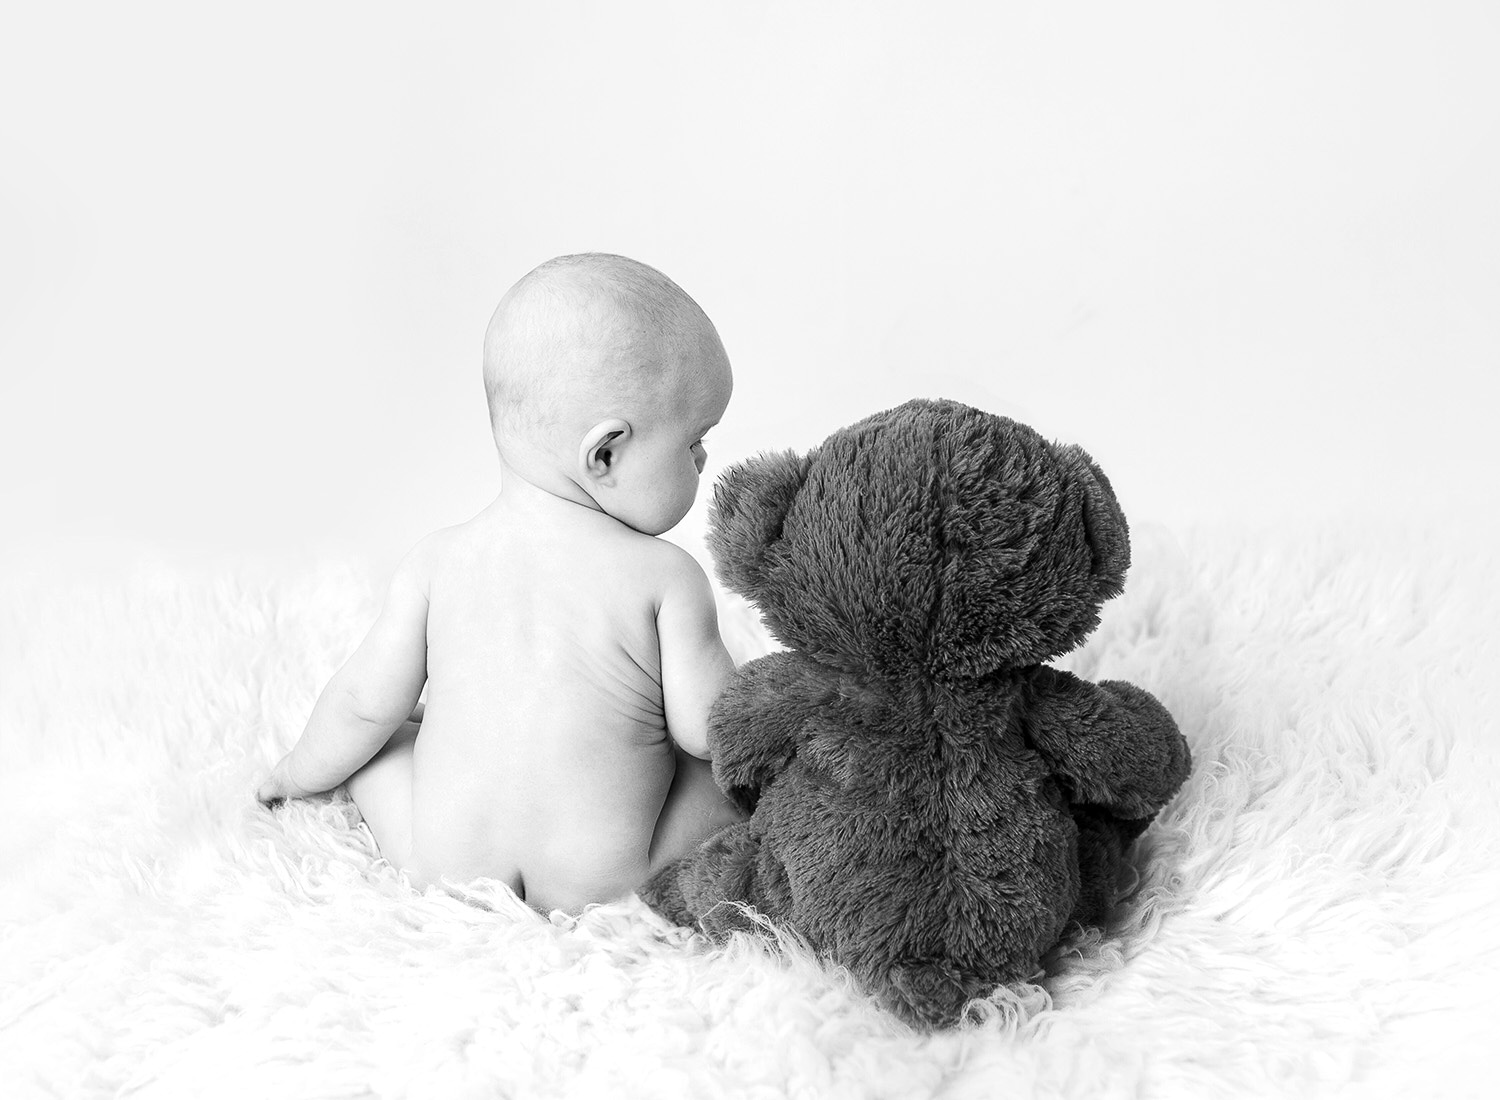 Baby looking at a stuffed teddy bear